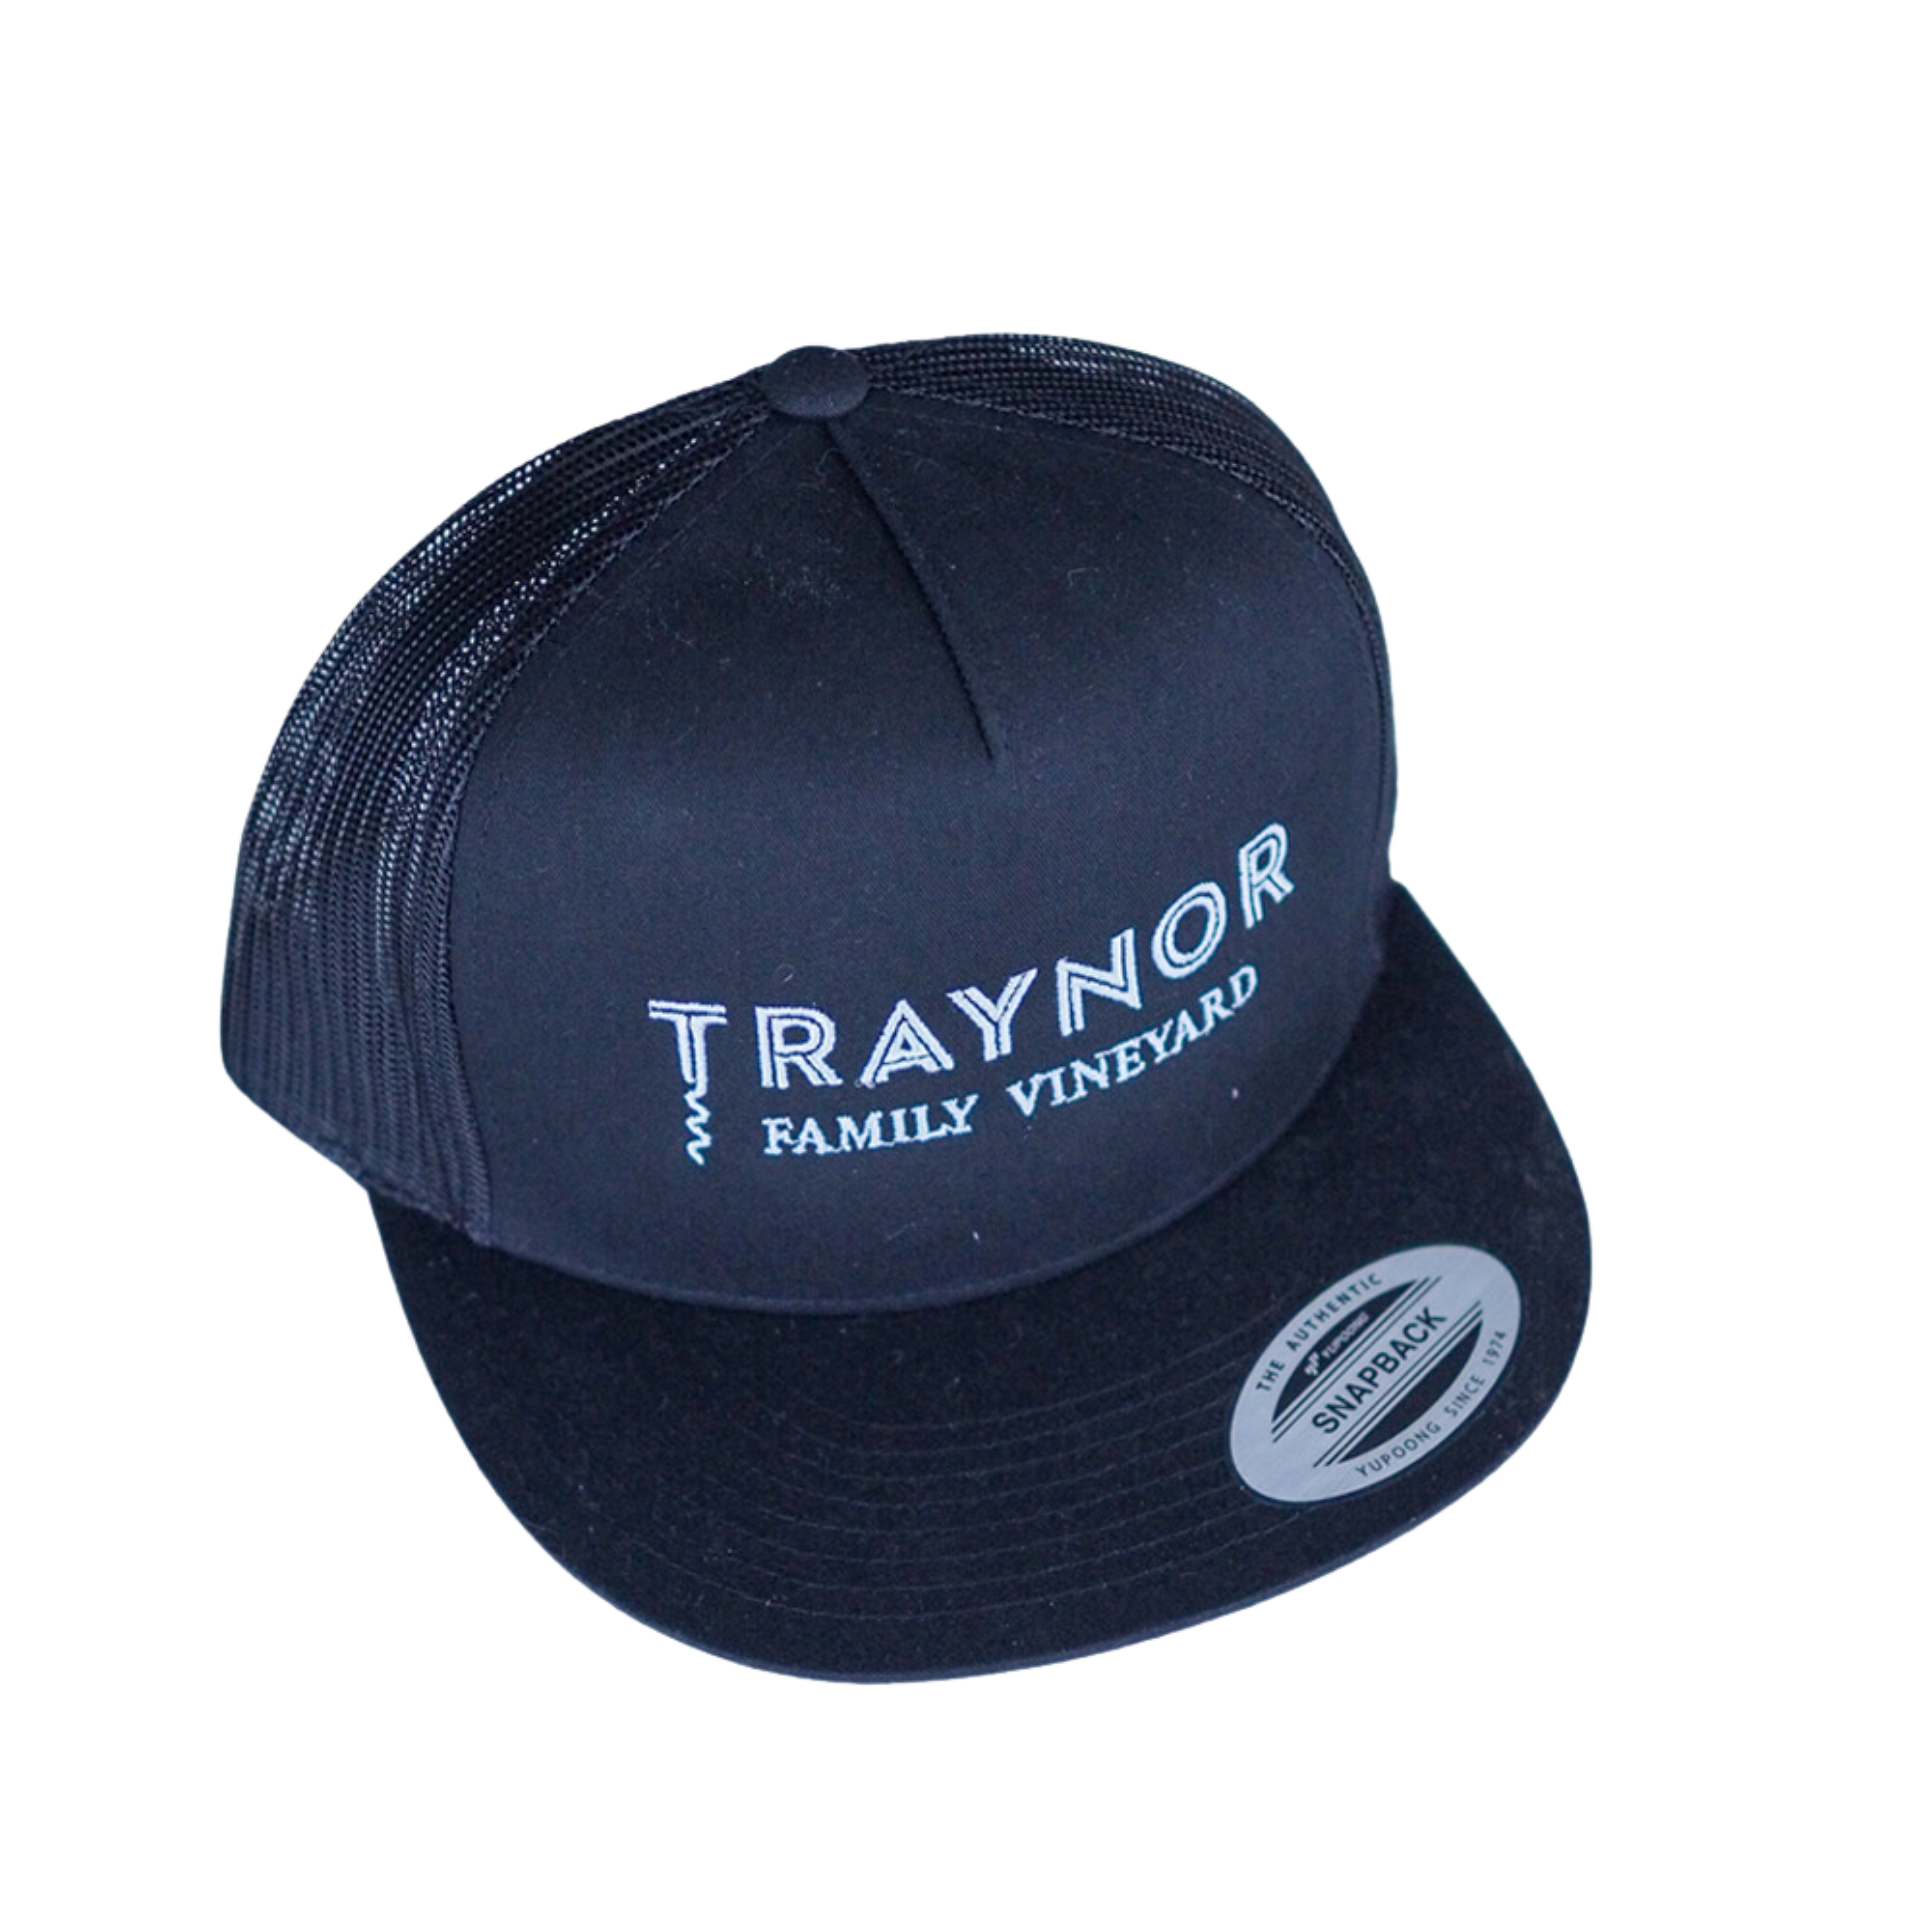 Traynor Baseball cap - Black